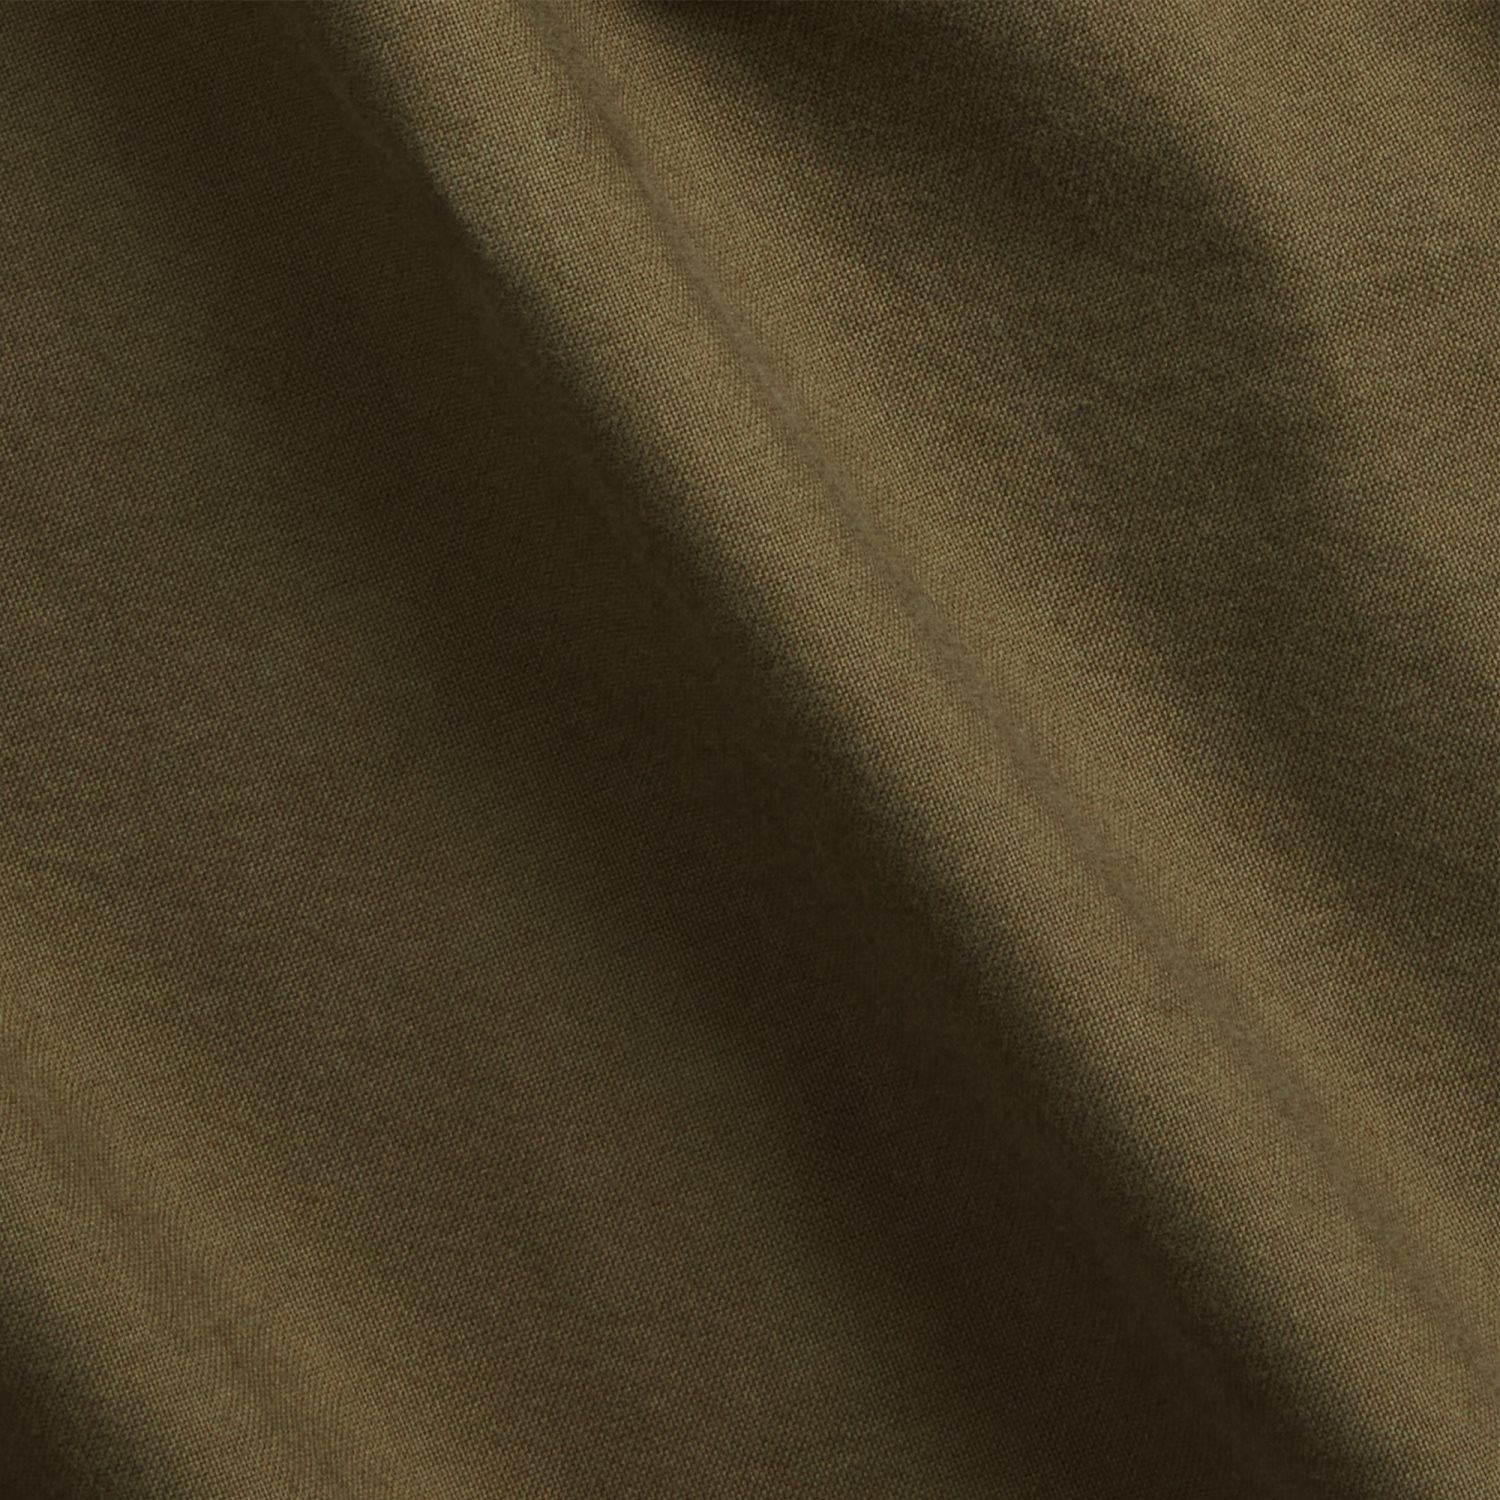 Polo Ralph Lauren Slim Fit Garment-Dyed Oxford Shirt Skjorte Oliven - chrismoa.no